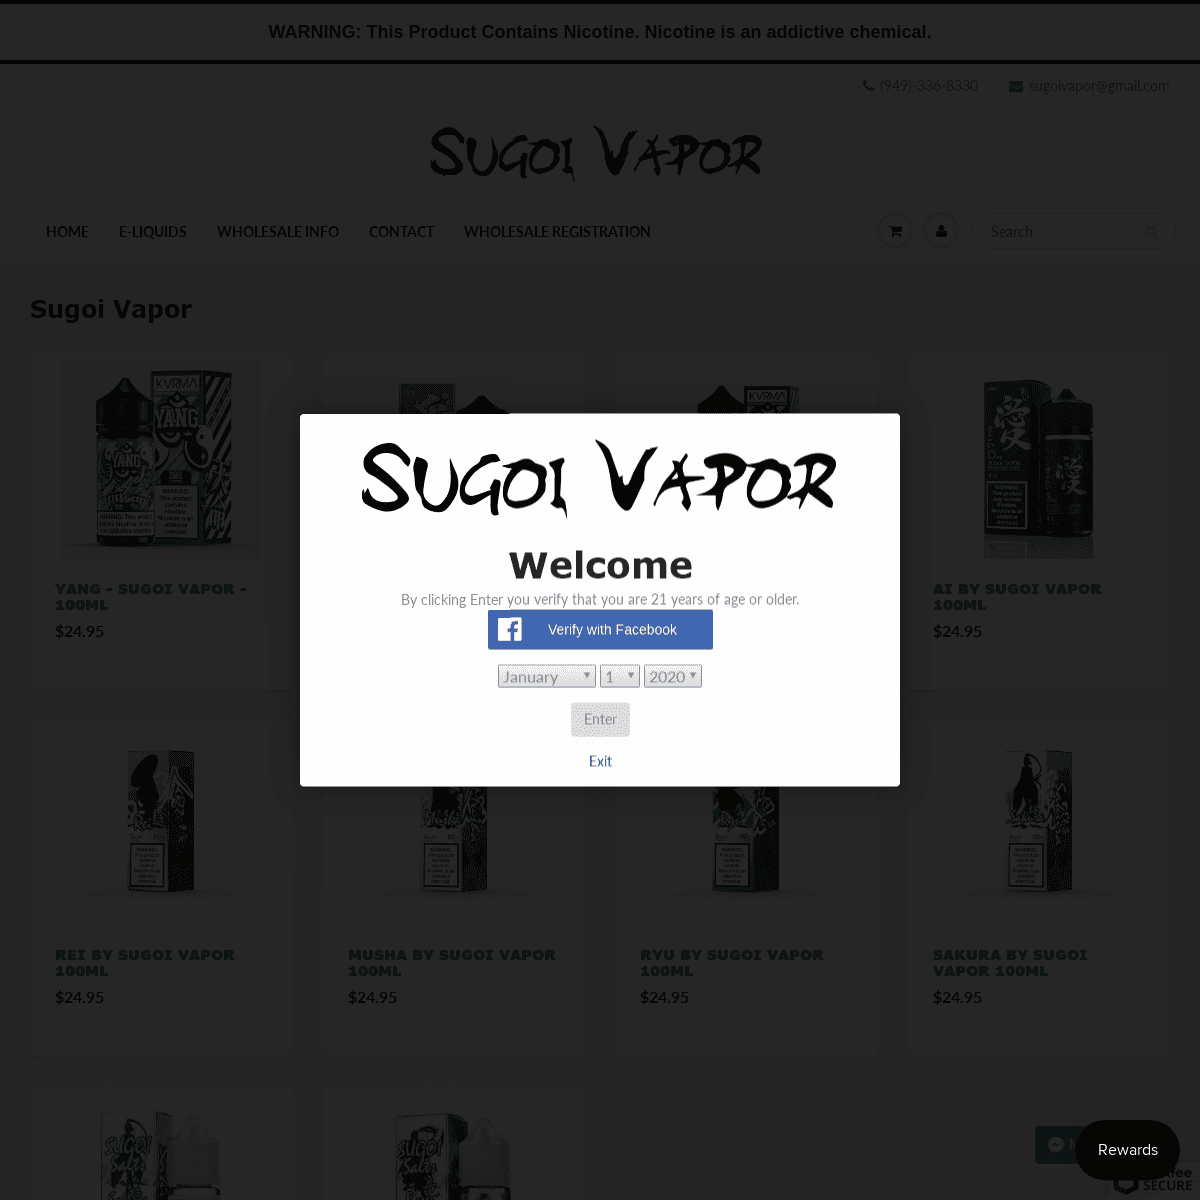 A complete backup of sugoivapor.com